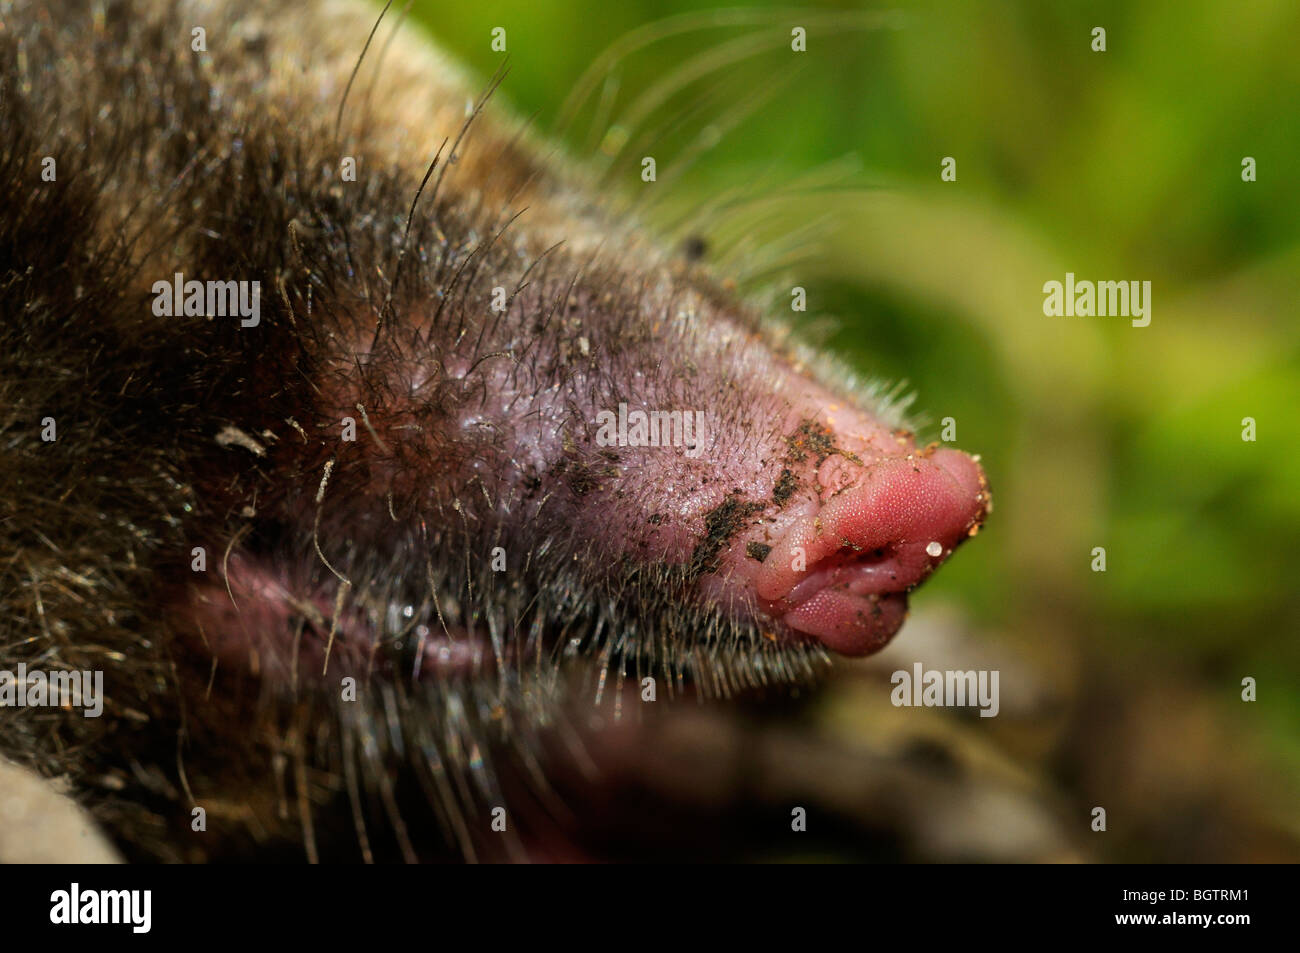 European Mole (Talpa europaea) close-up showing detail on snout, Oxfordshire, UK. Stock Photo